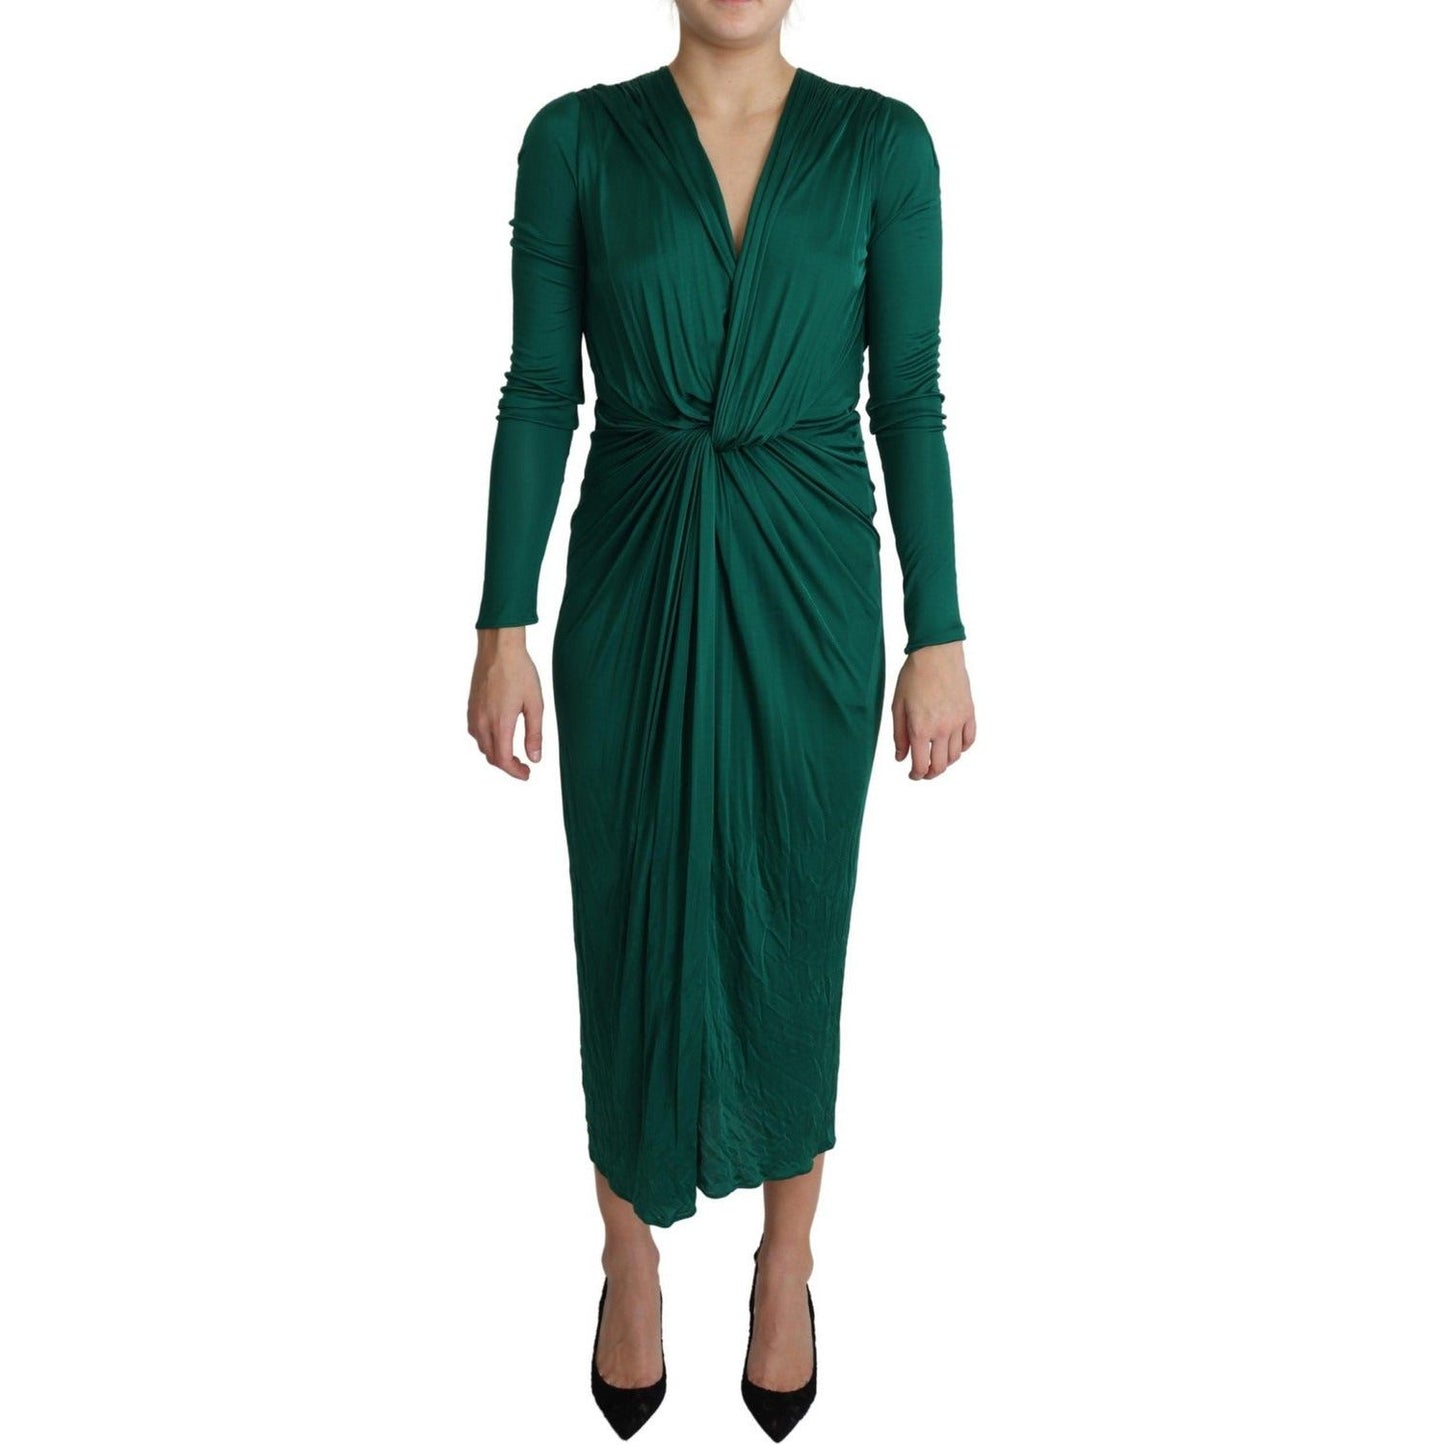 Dolce & Gabbana Emerald Elegance Bodycon Midi Dress green-fitted-silhouette-midi-viscose-dress IMG_9479-scaled-295aa74a-16d.jpg